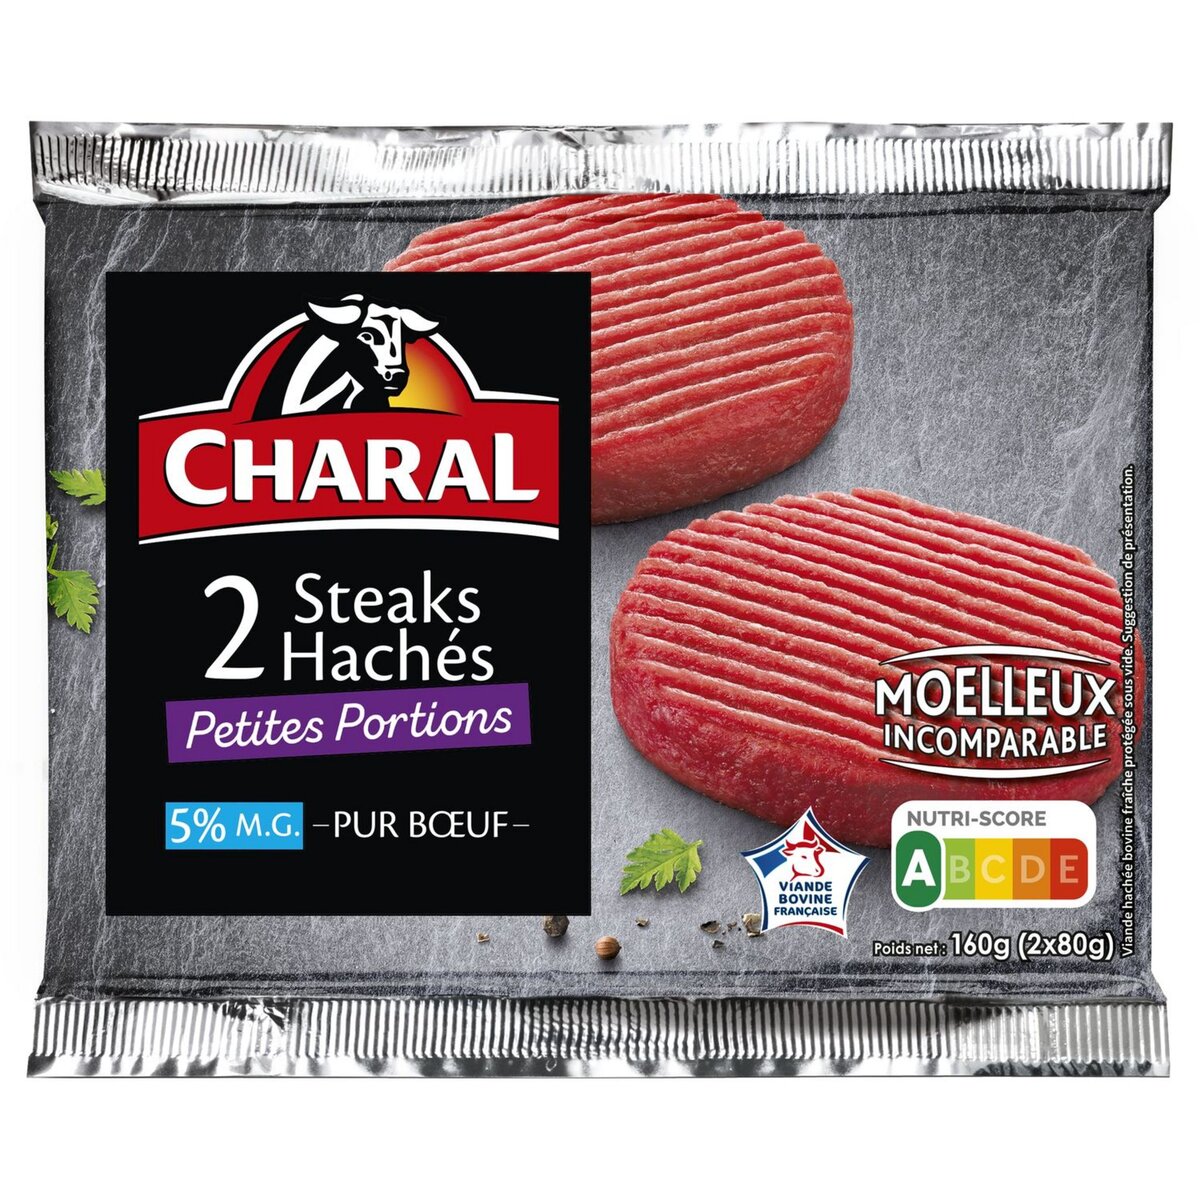 CHARAL Steaks Hachés Pur Bœuf 5%mg 2 pièces 160g